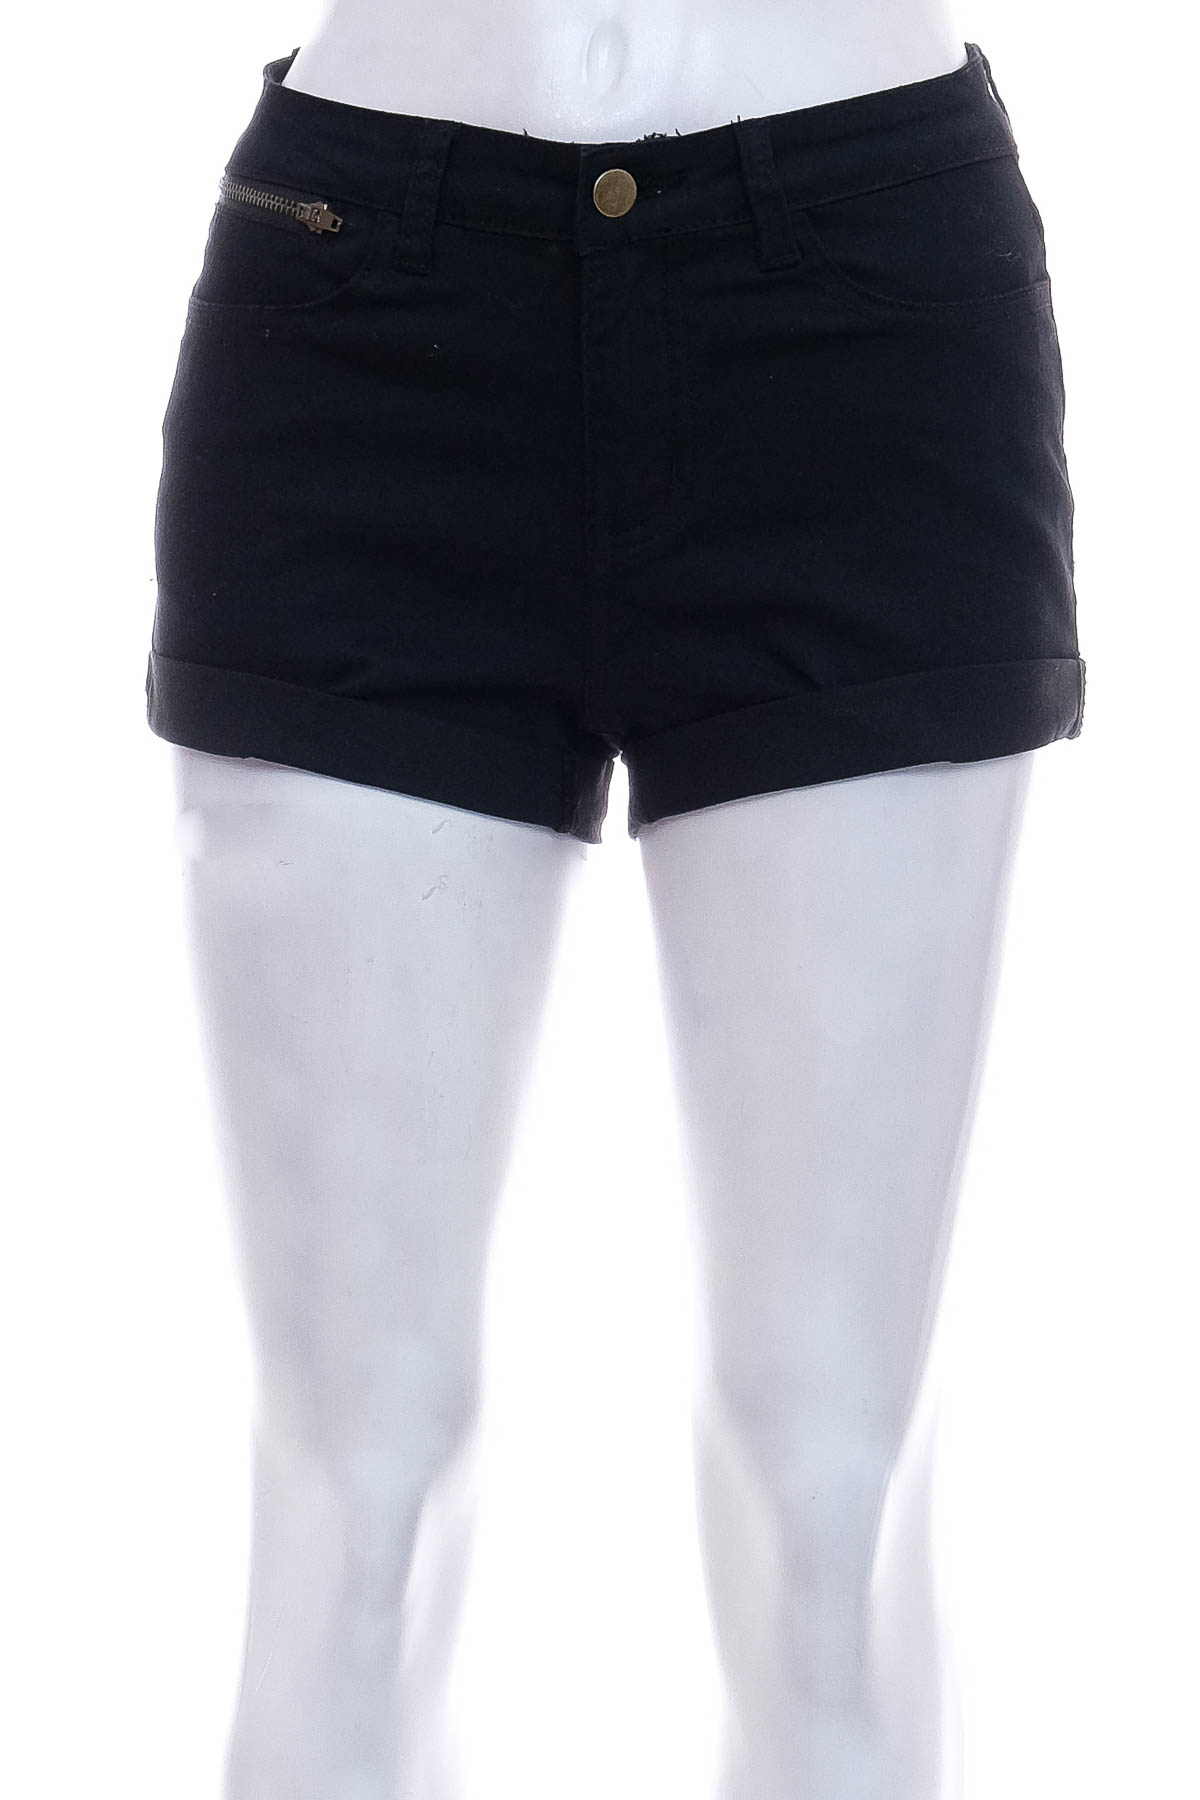 Female shorts - Valleygirl - 0